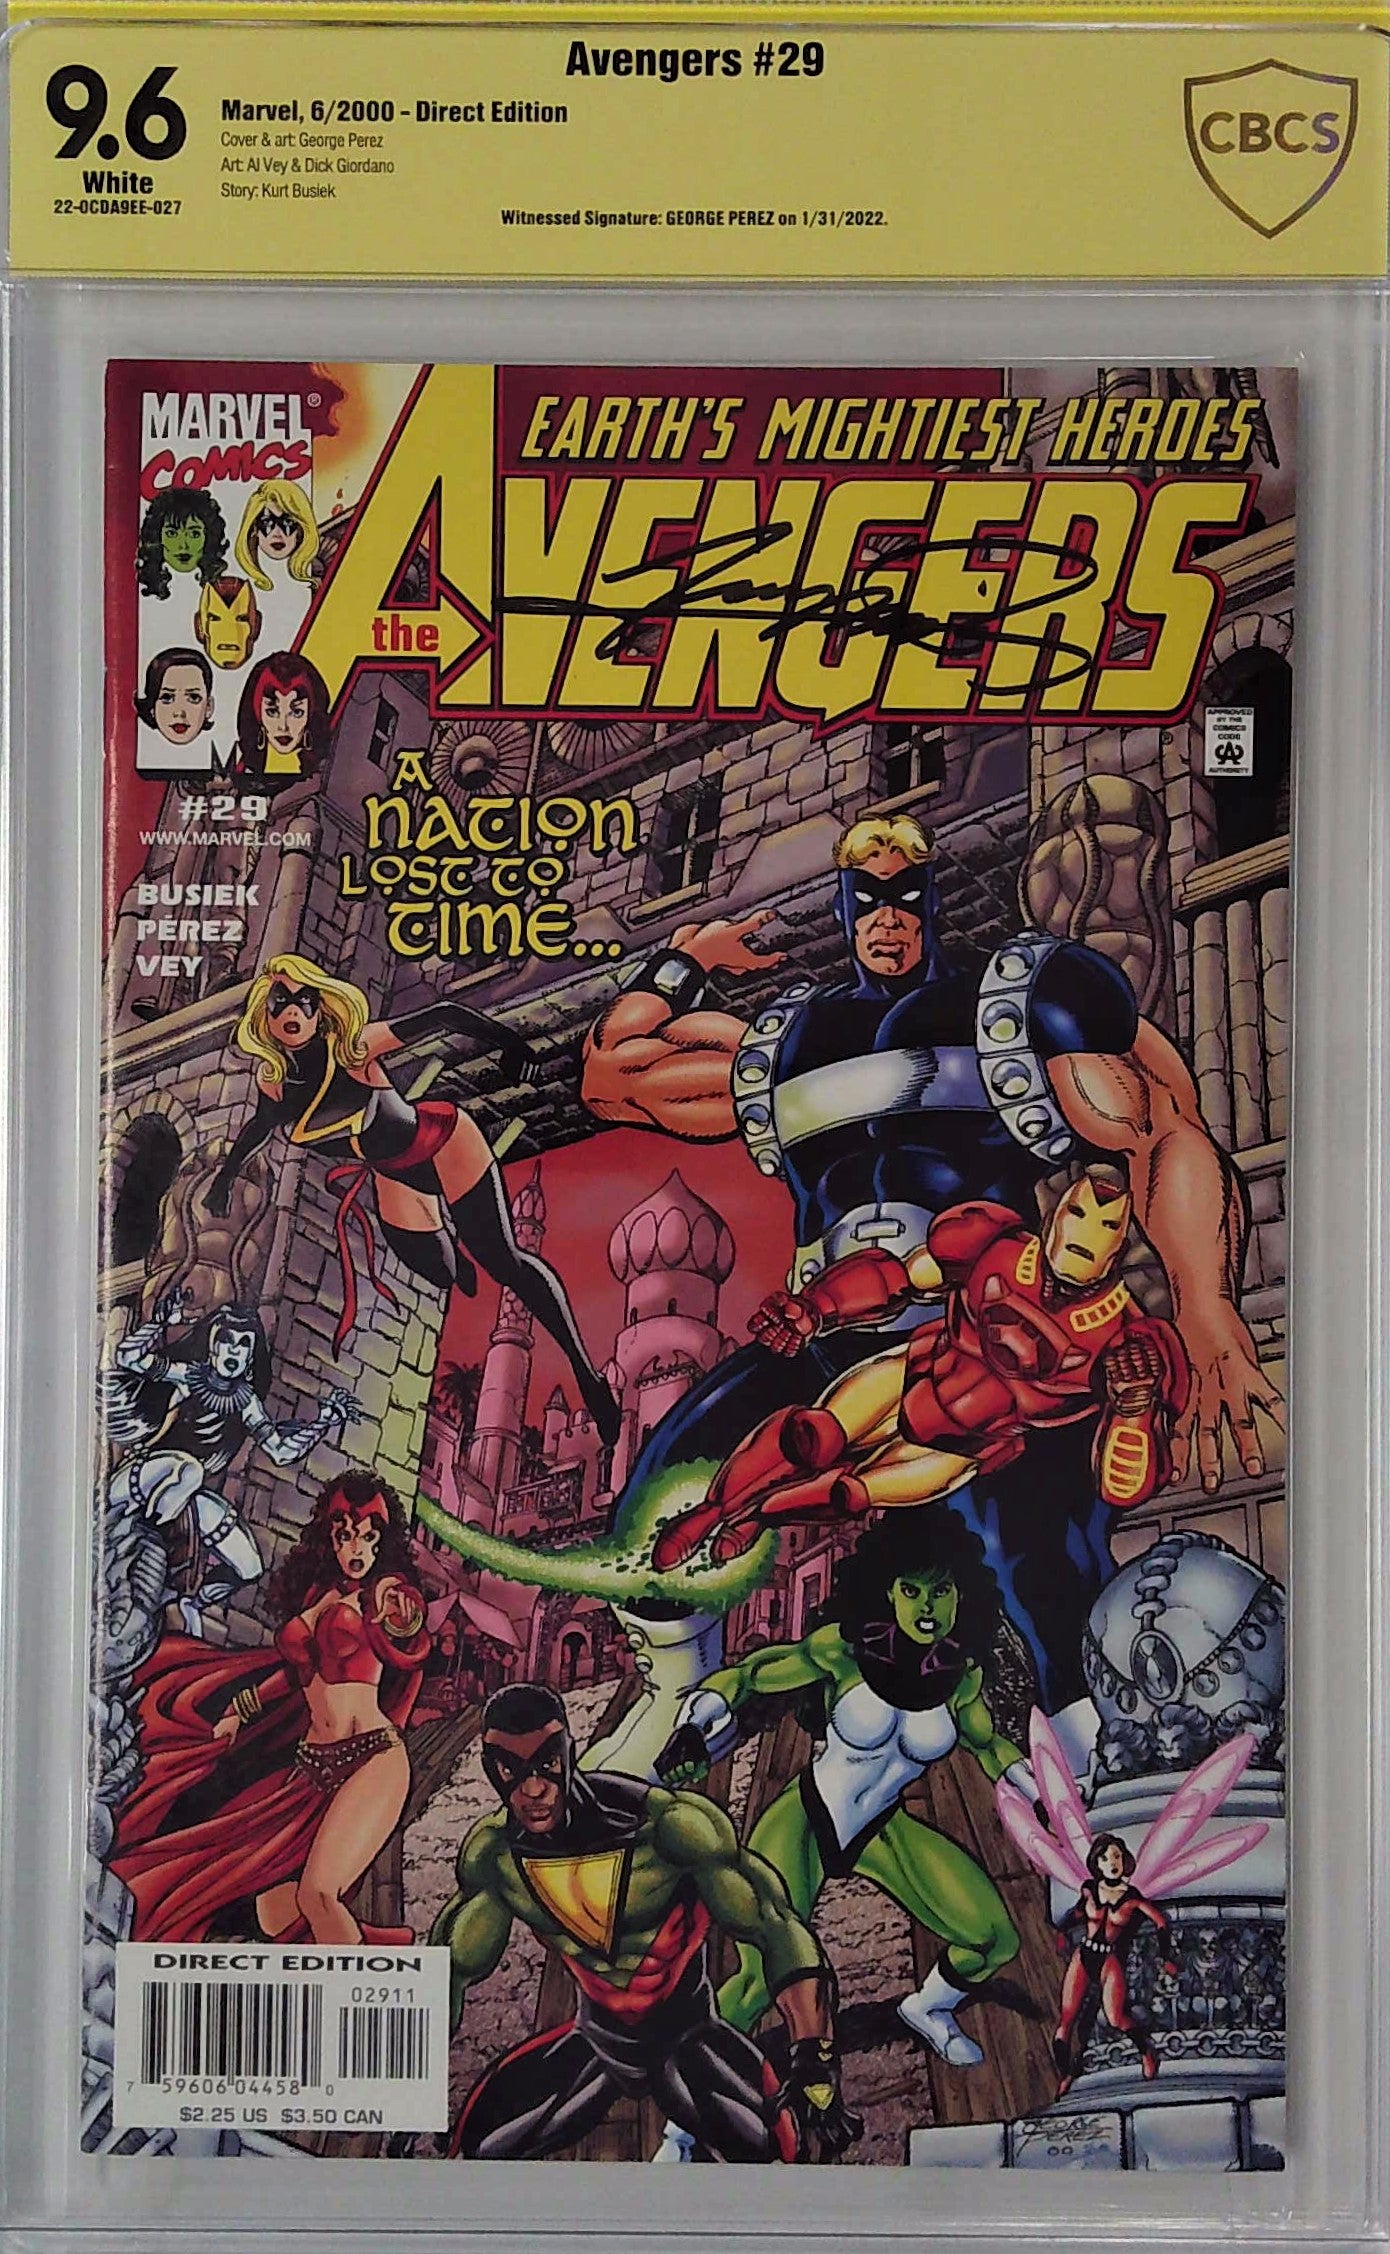 Avengers #29 Direct Edition CBCS 9.6 Yellow Label George Perez